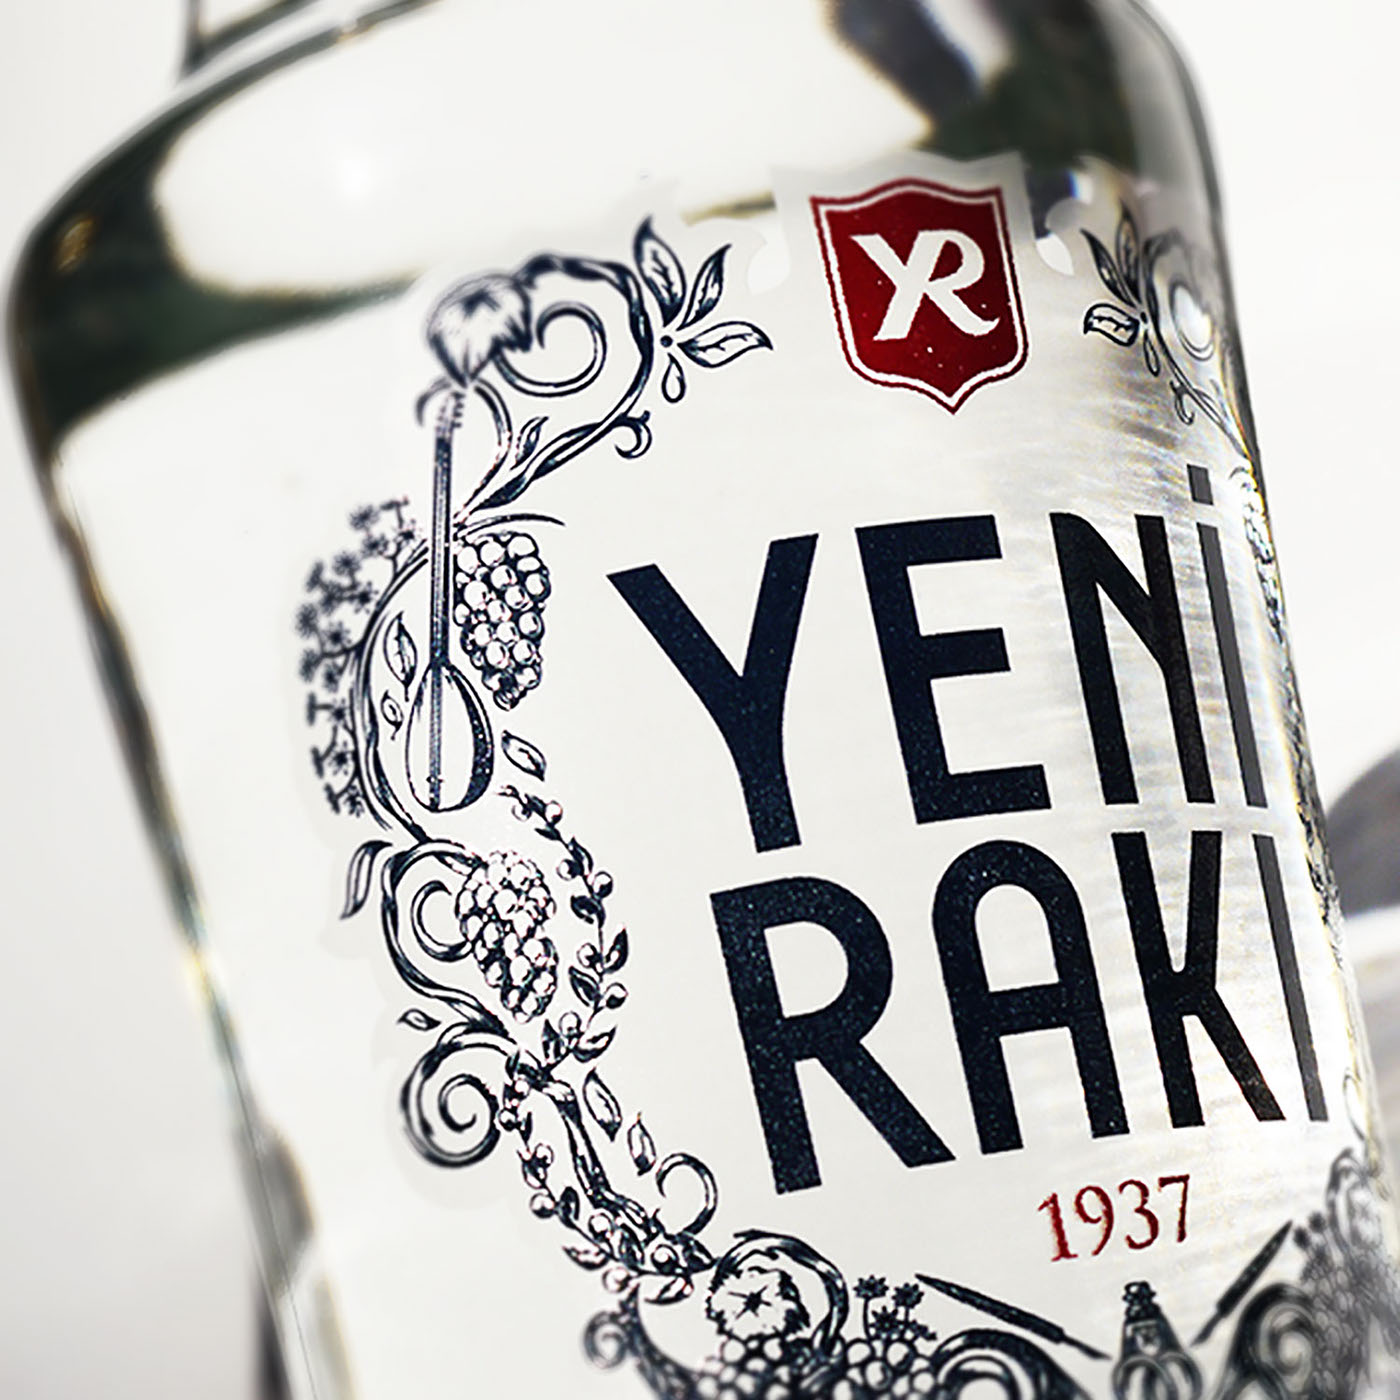 turkish Yeni Rakı alcohol YENI RAKI illustrator of yeni raki ilustrator cizer tasarım Yeni Rakı